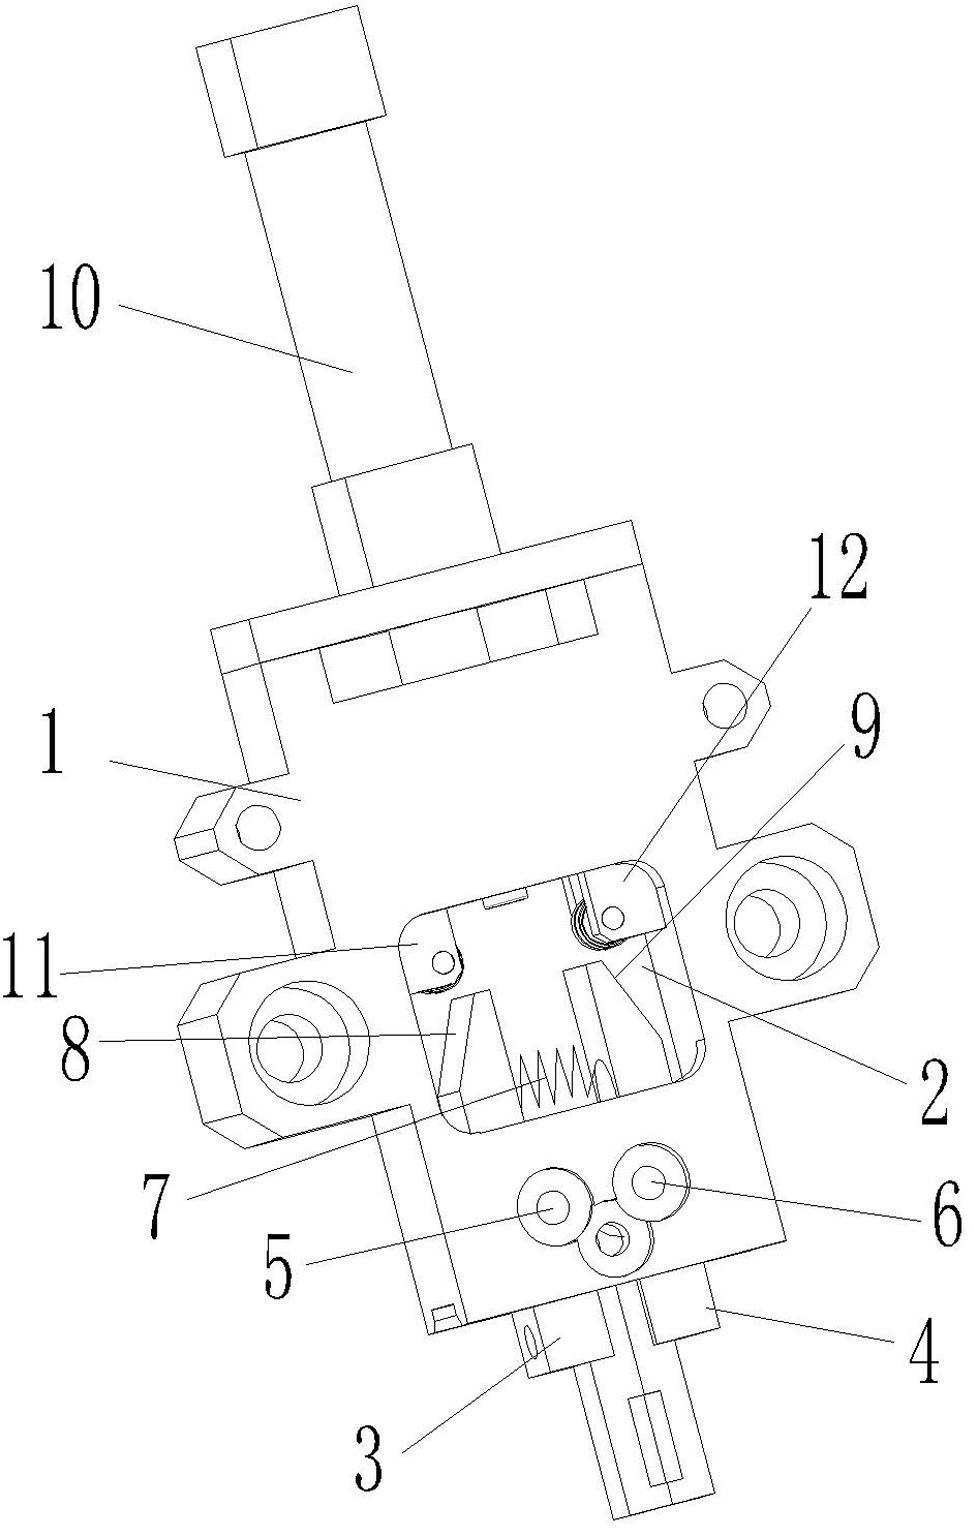 Workpiece holding mechanism